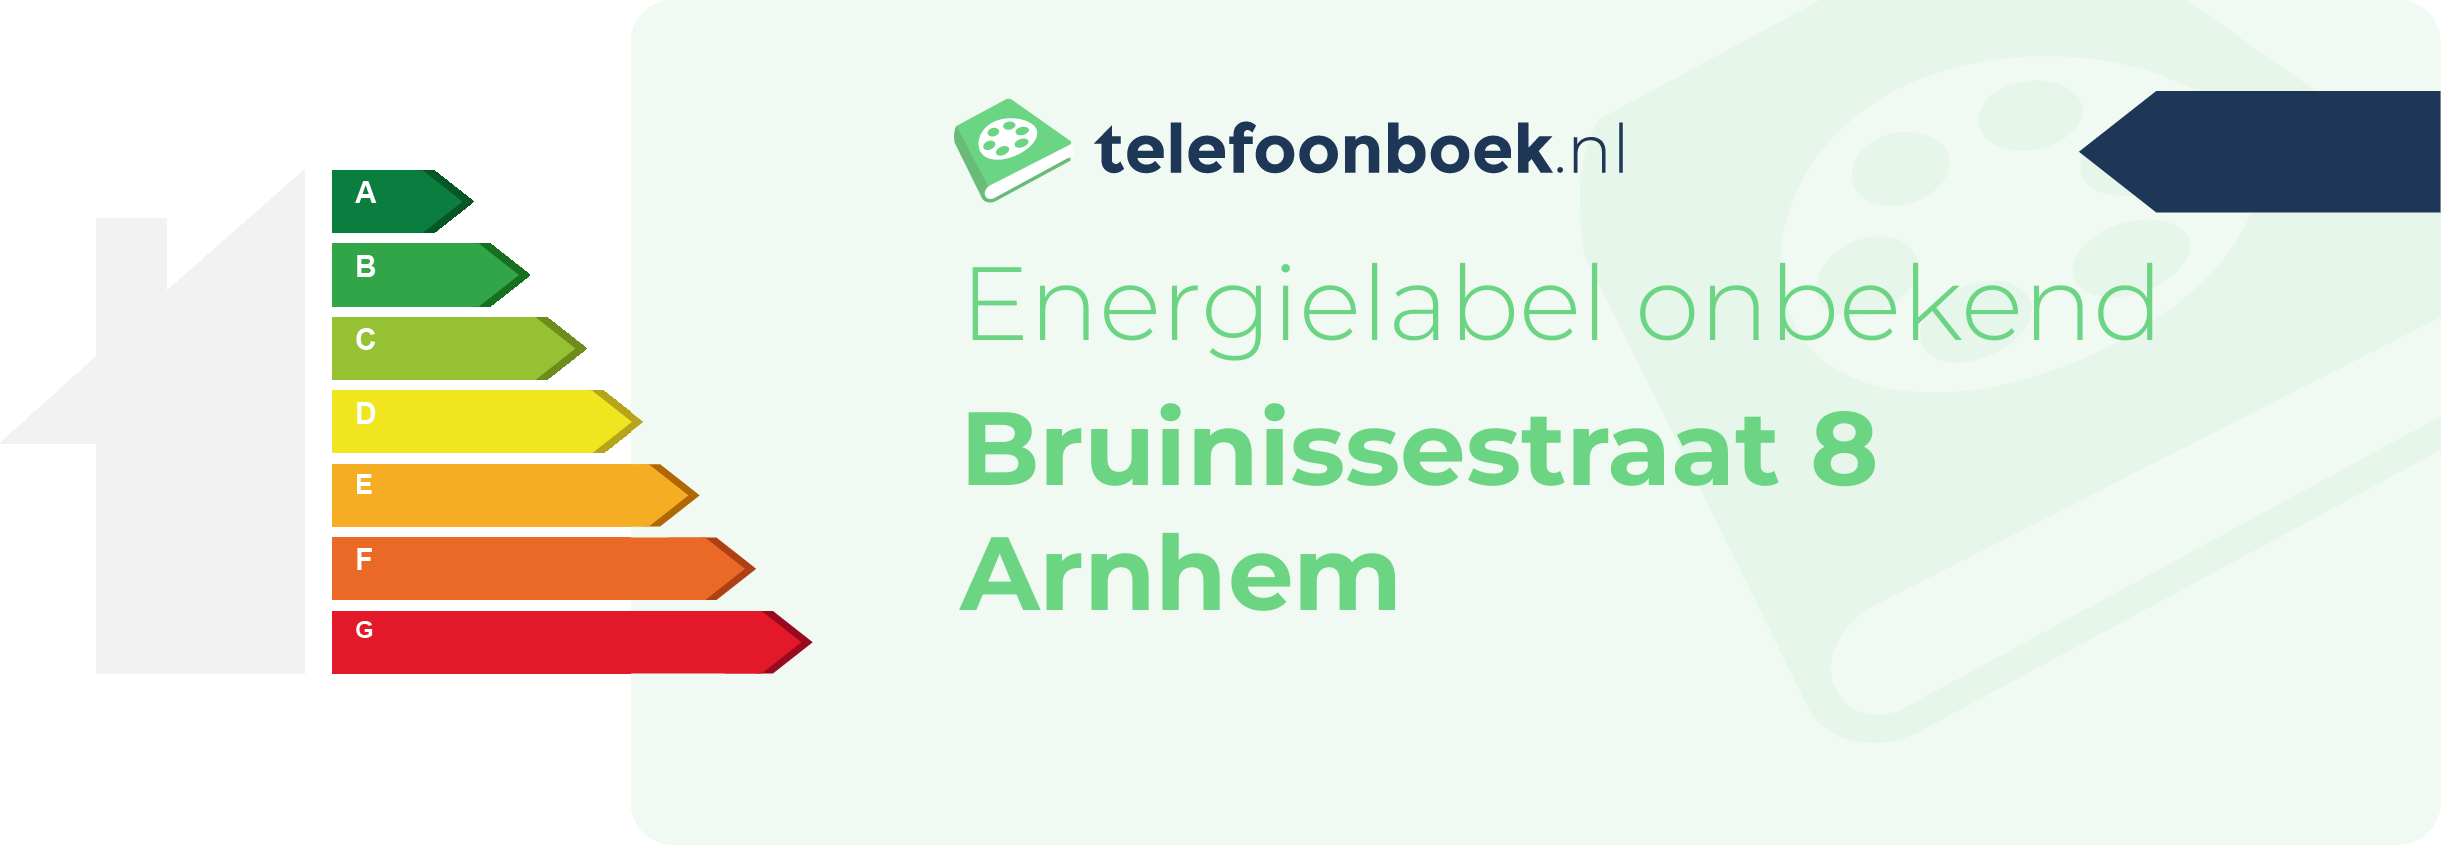 Energielabel Bruinissestraat 8 Arnhem